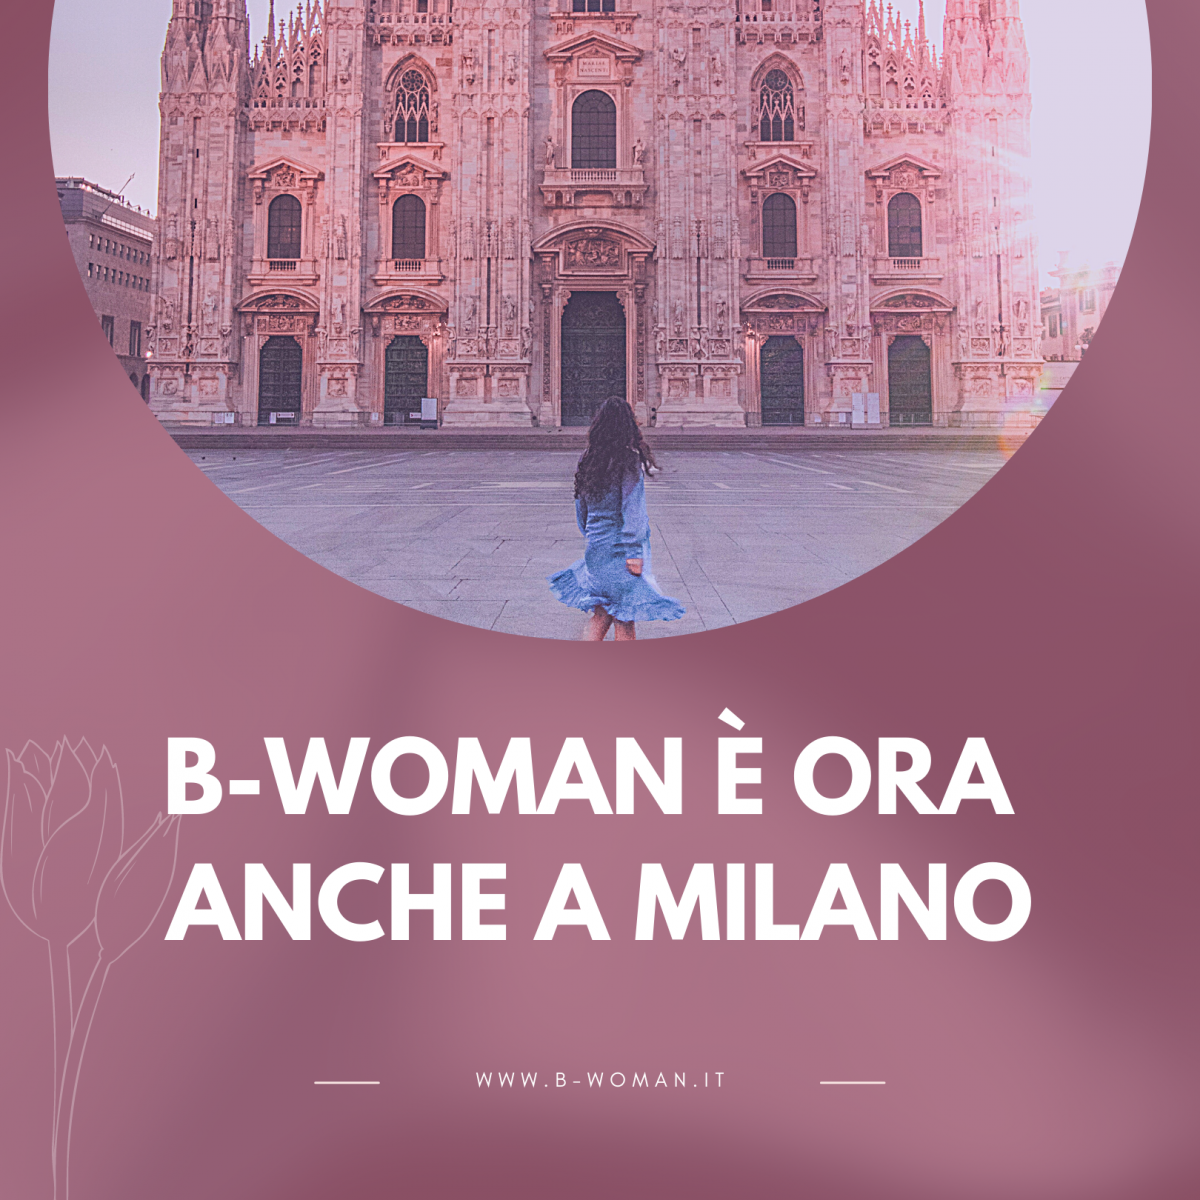 B-Woman-è-anche-a-Milano-1200x1200.png